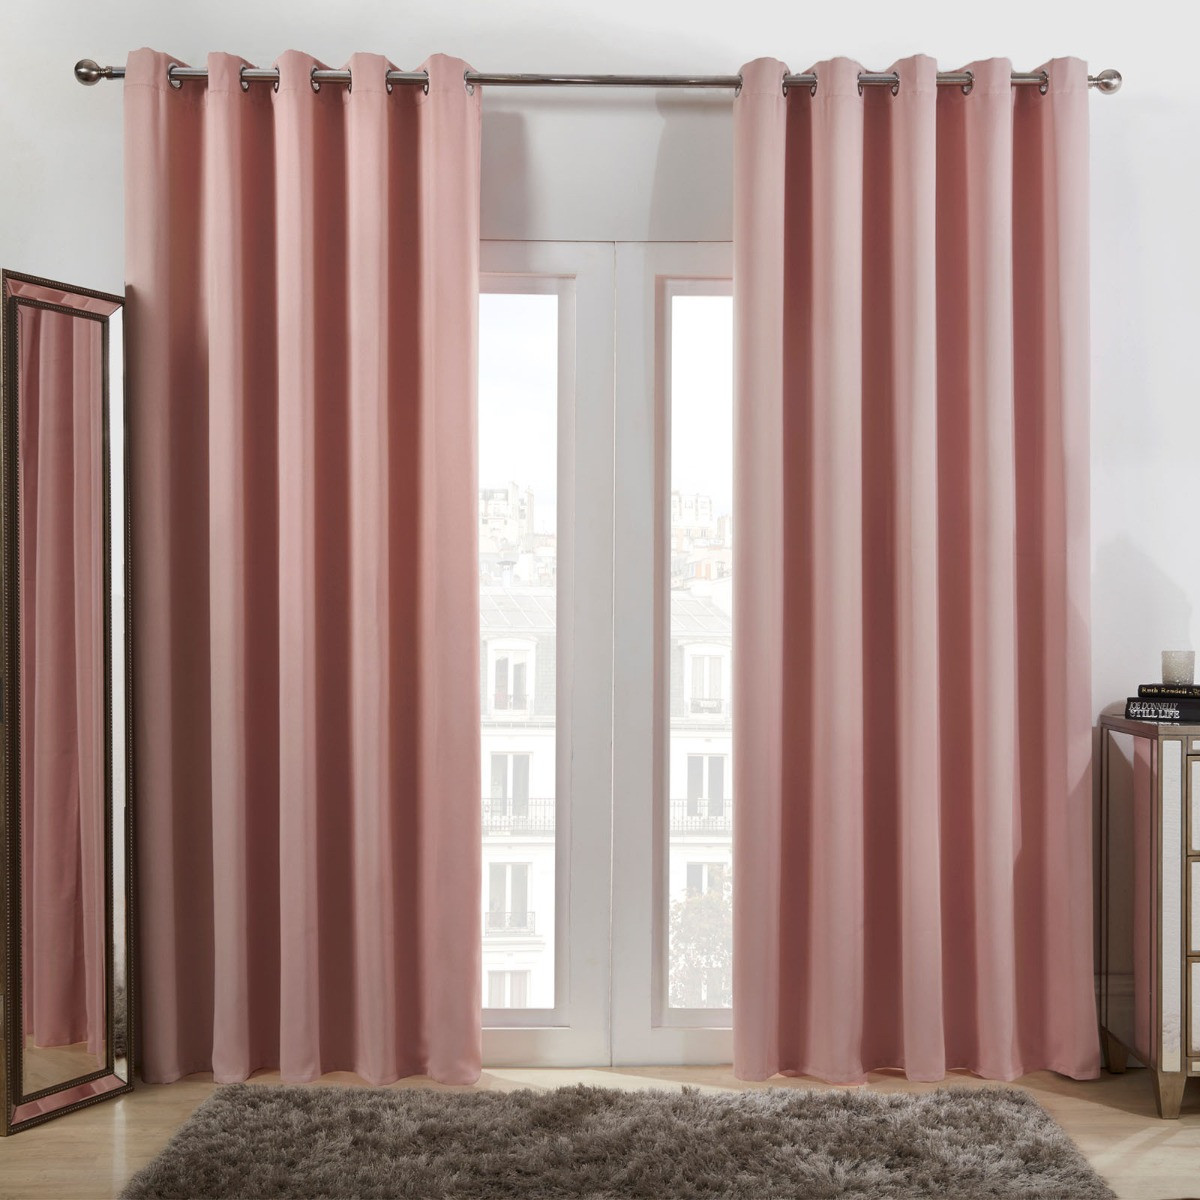 Dreamscene Eyelet Blackout Curtains - Blush Pink>